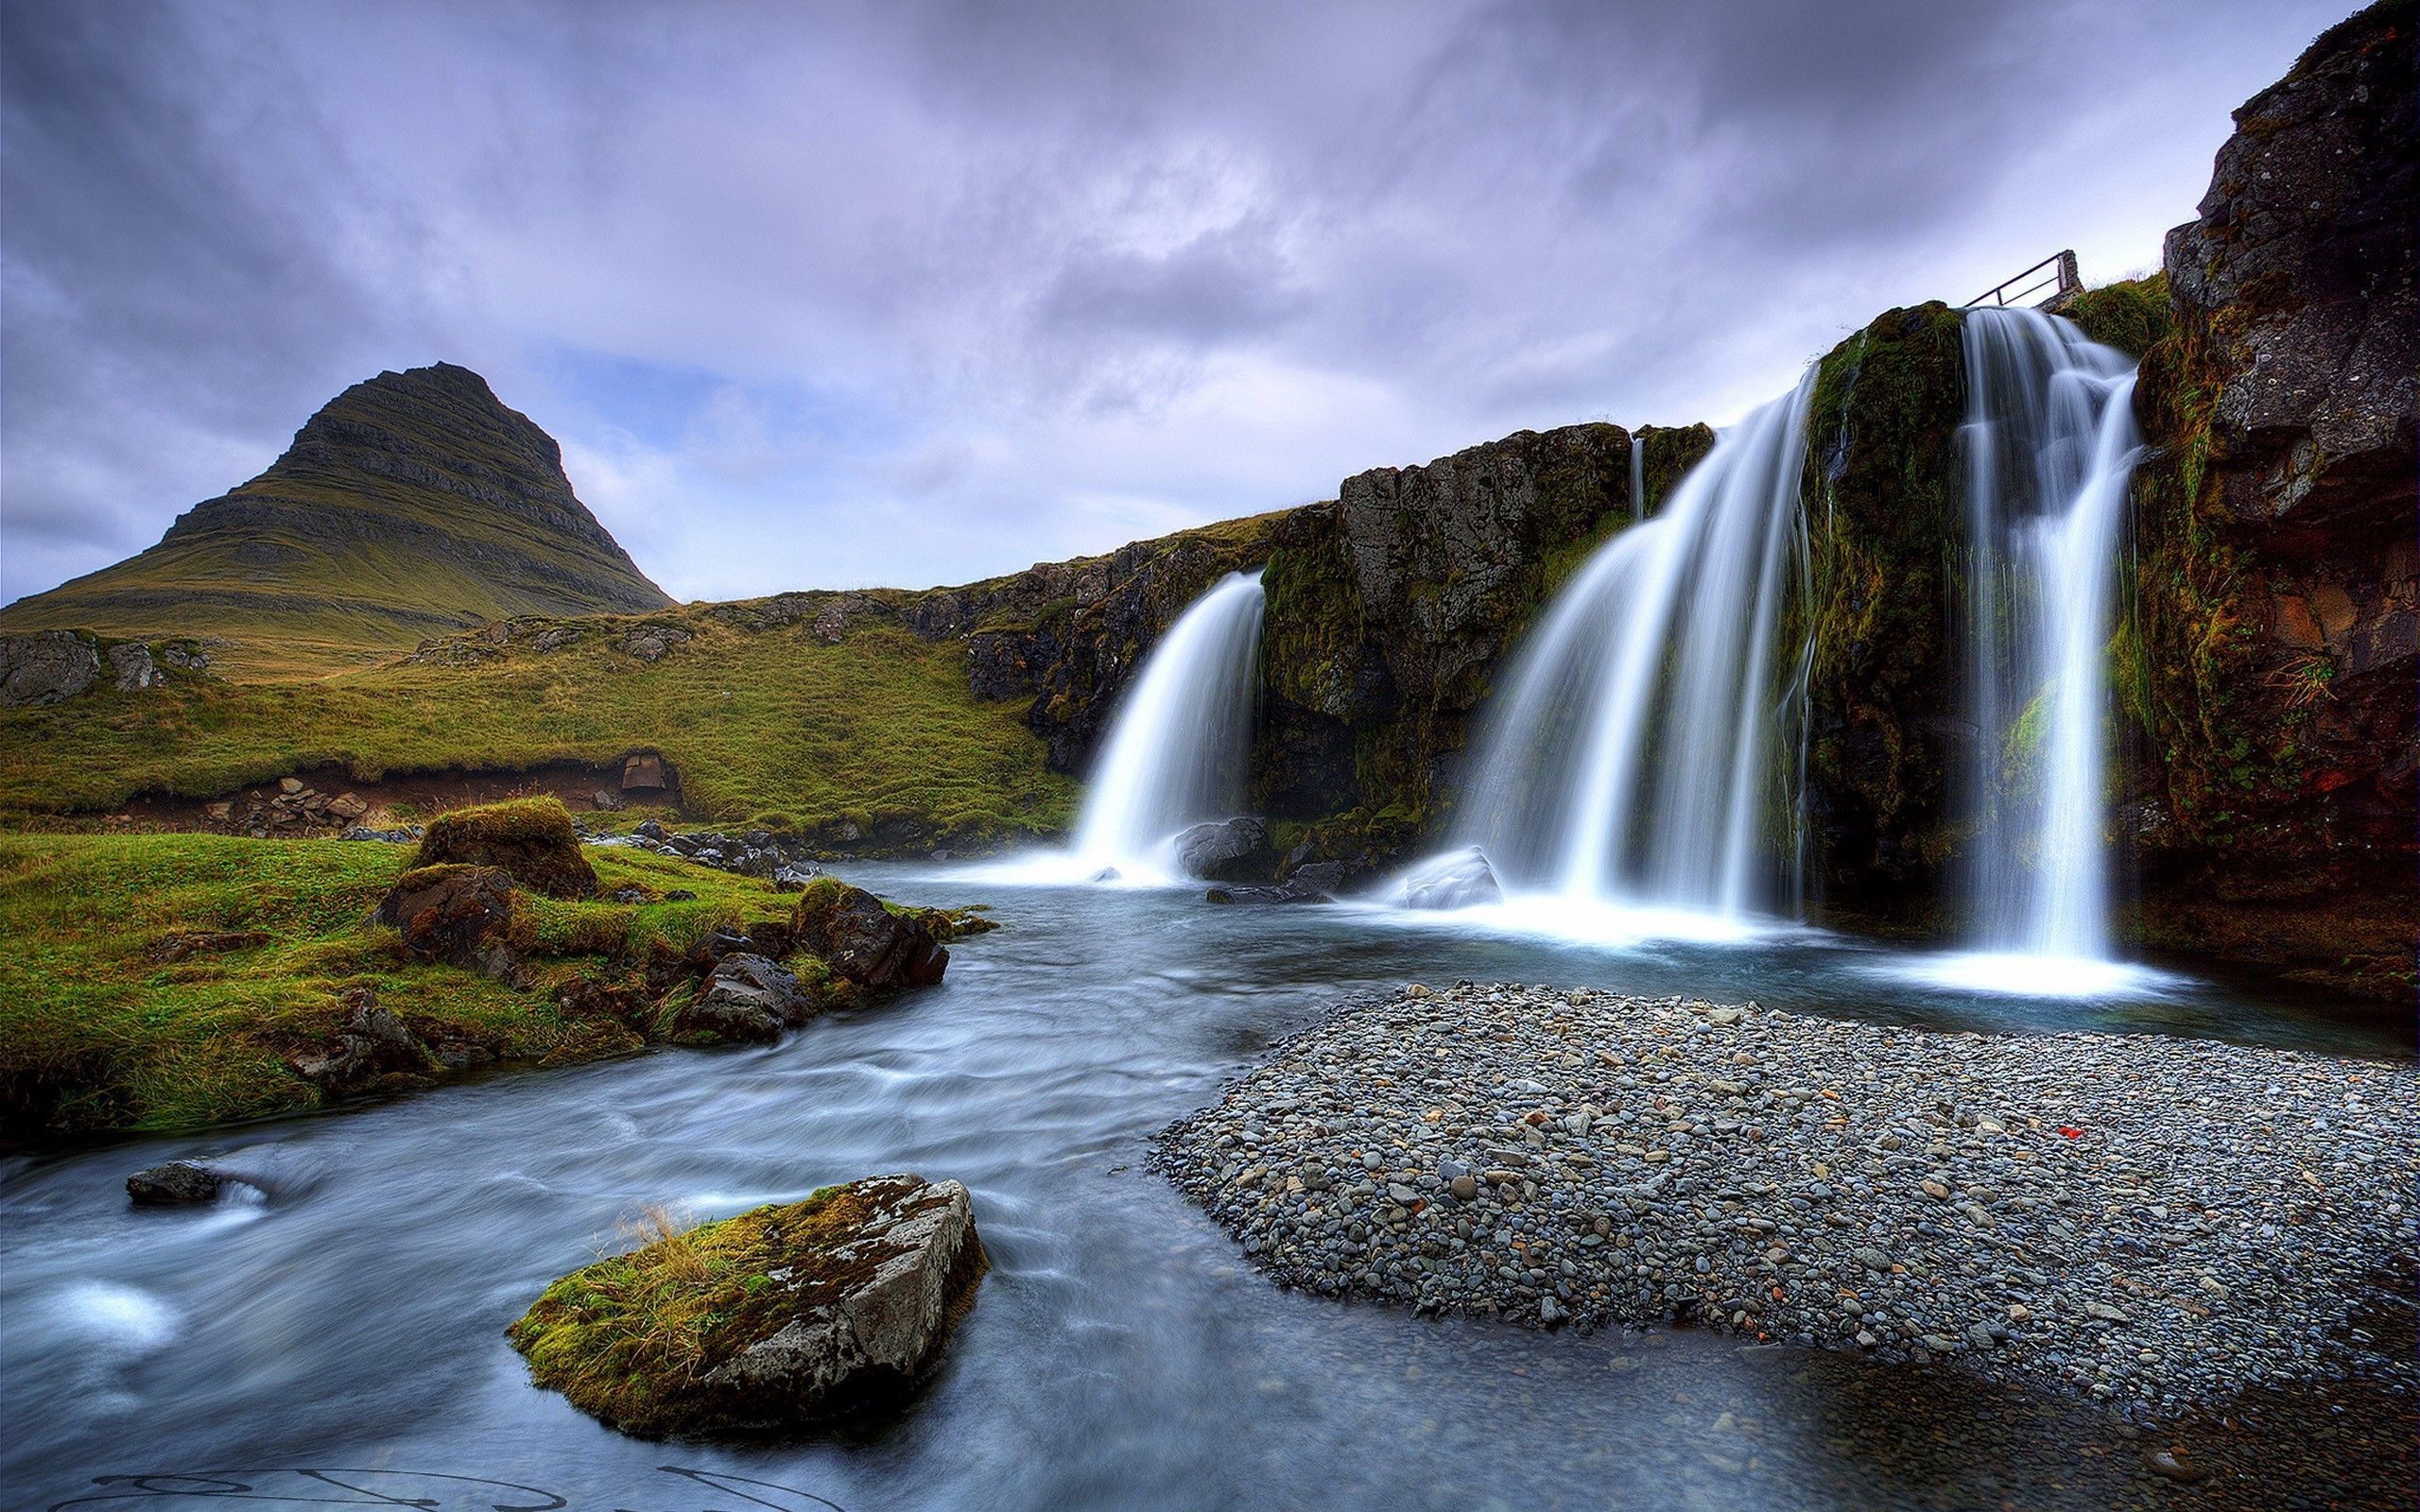 Kirkjufell mountain and waterfall, Iceland wallpaper - 1215425